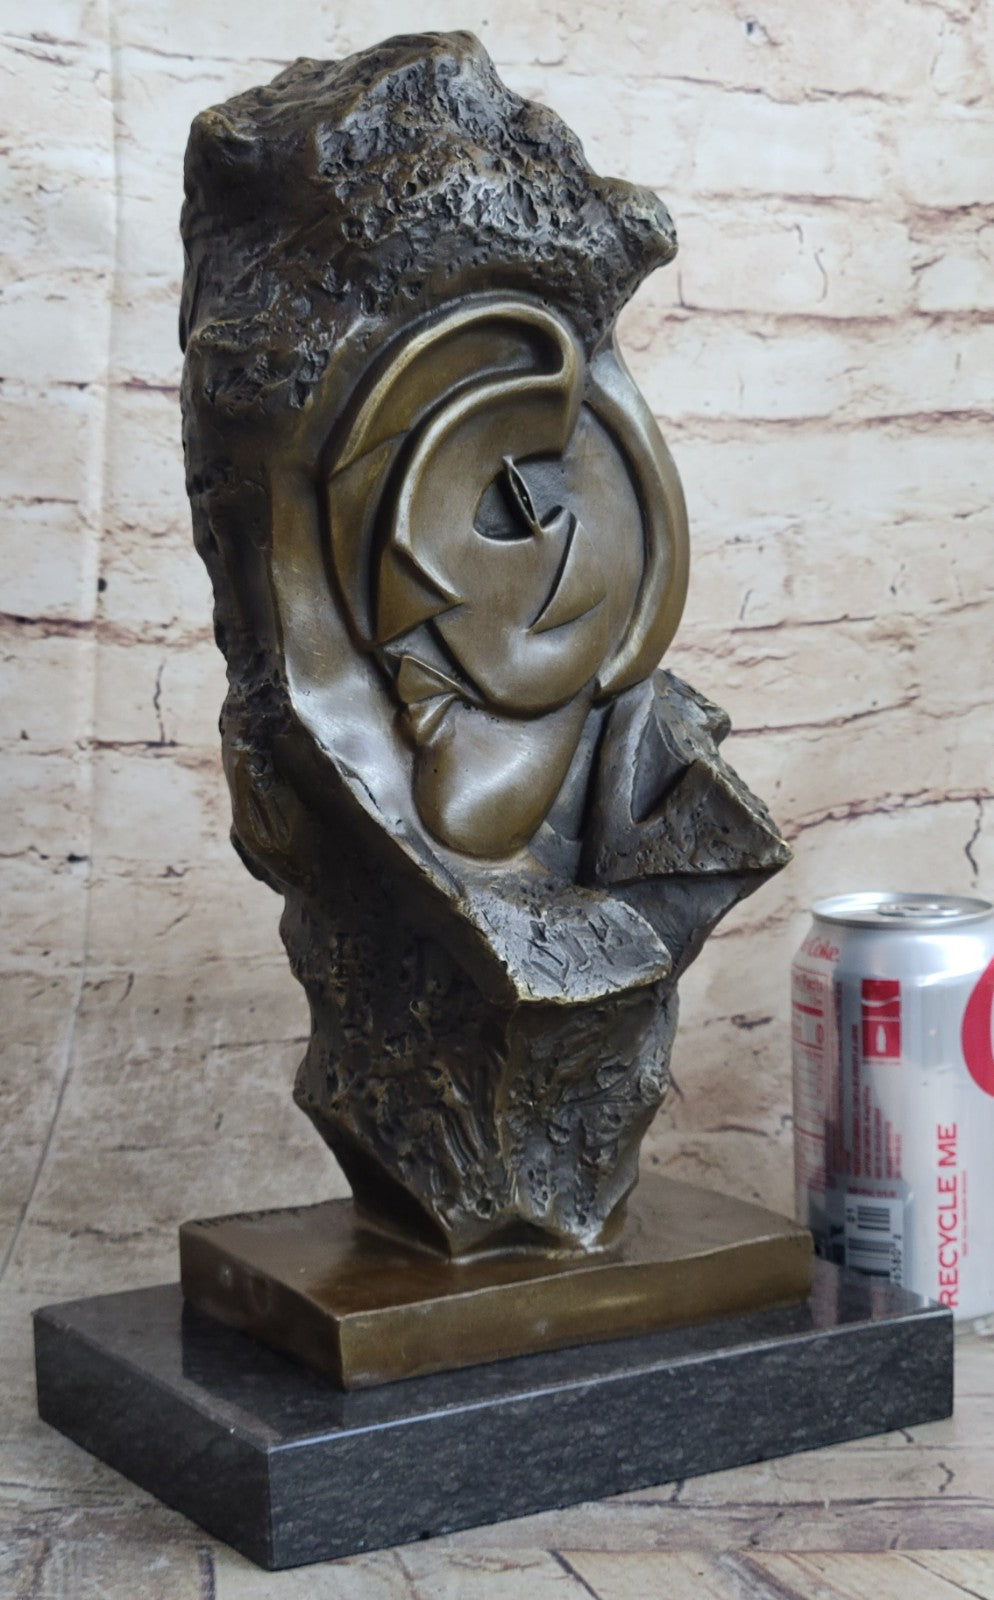 Handcrafted bronze sculpture SALE Art Modern Abstract Signed Salvador Dali